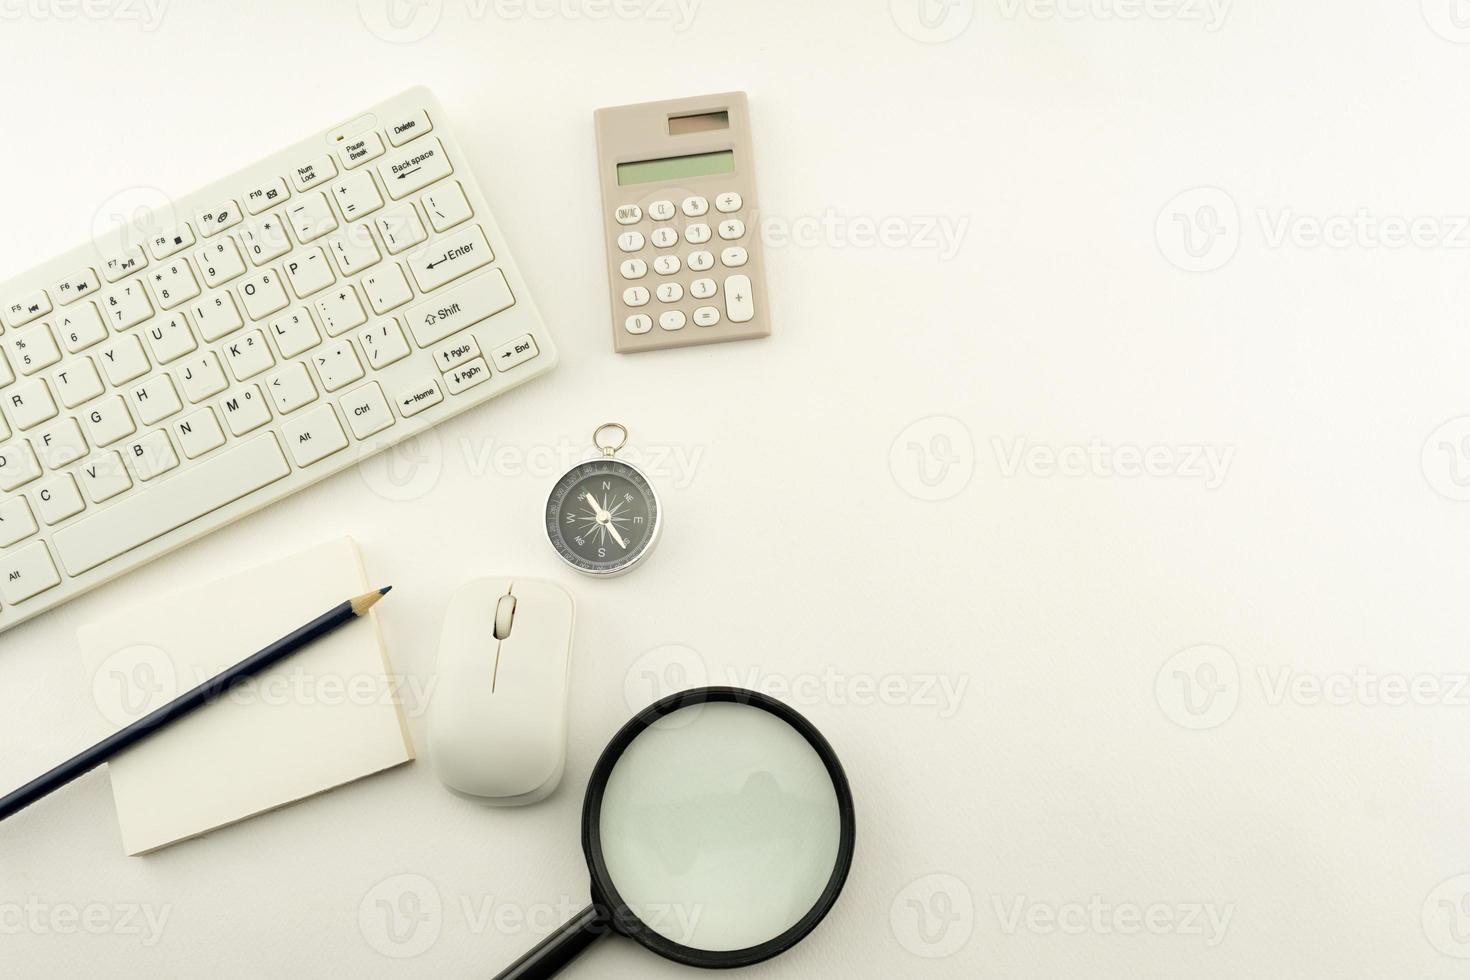 zakelijke objecten van pc, toetsenbord, muis, potlood, kompas en rekenmachine, vergrootglas op witte tabelachtergrond. foto